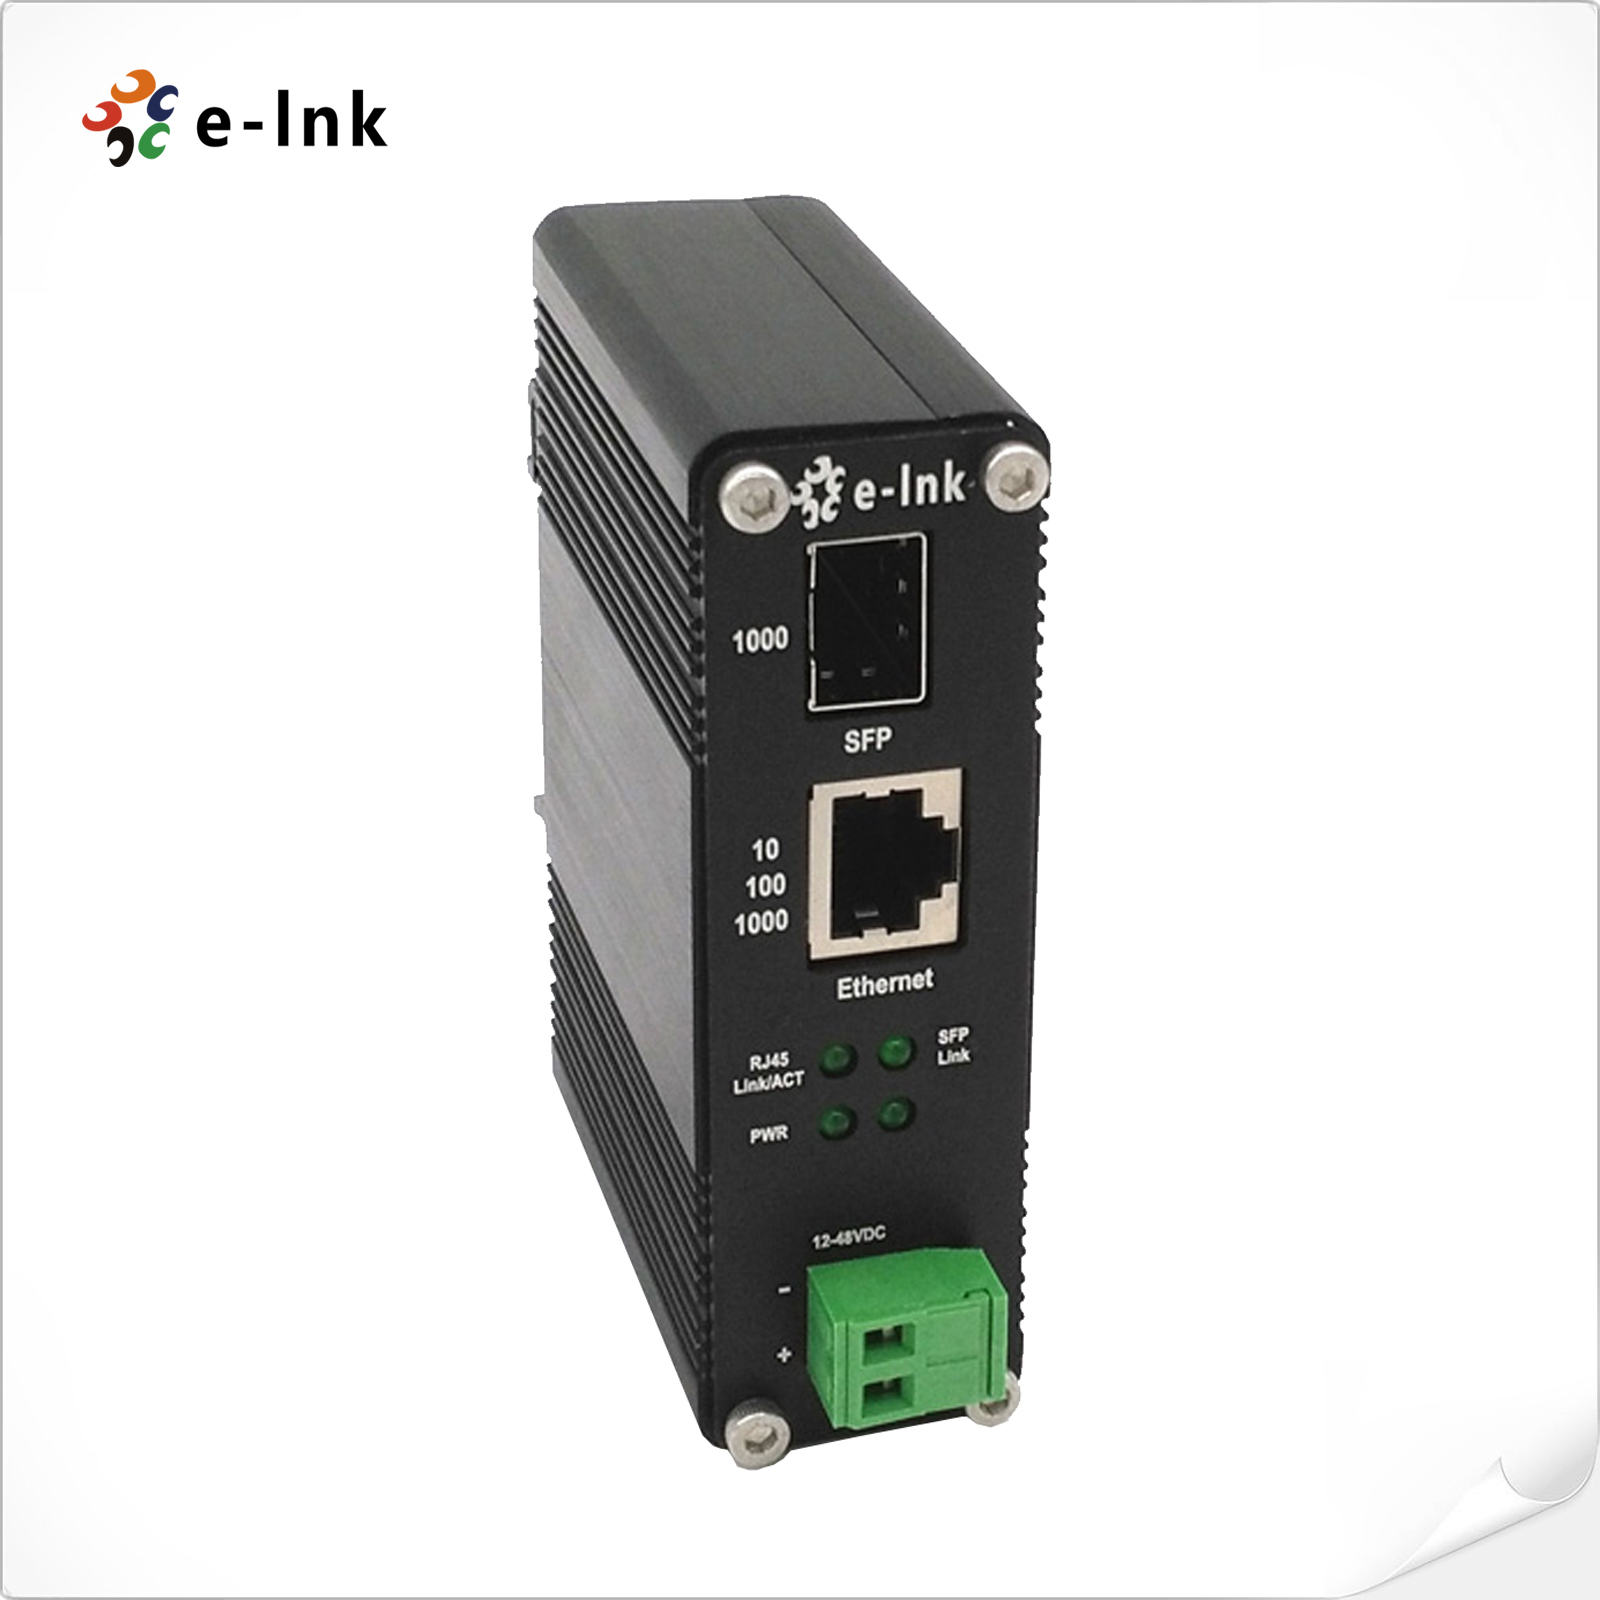 IMC Series Industrial 100Base-T to 100Base-X SFP Ethernet Media Converter